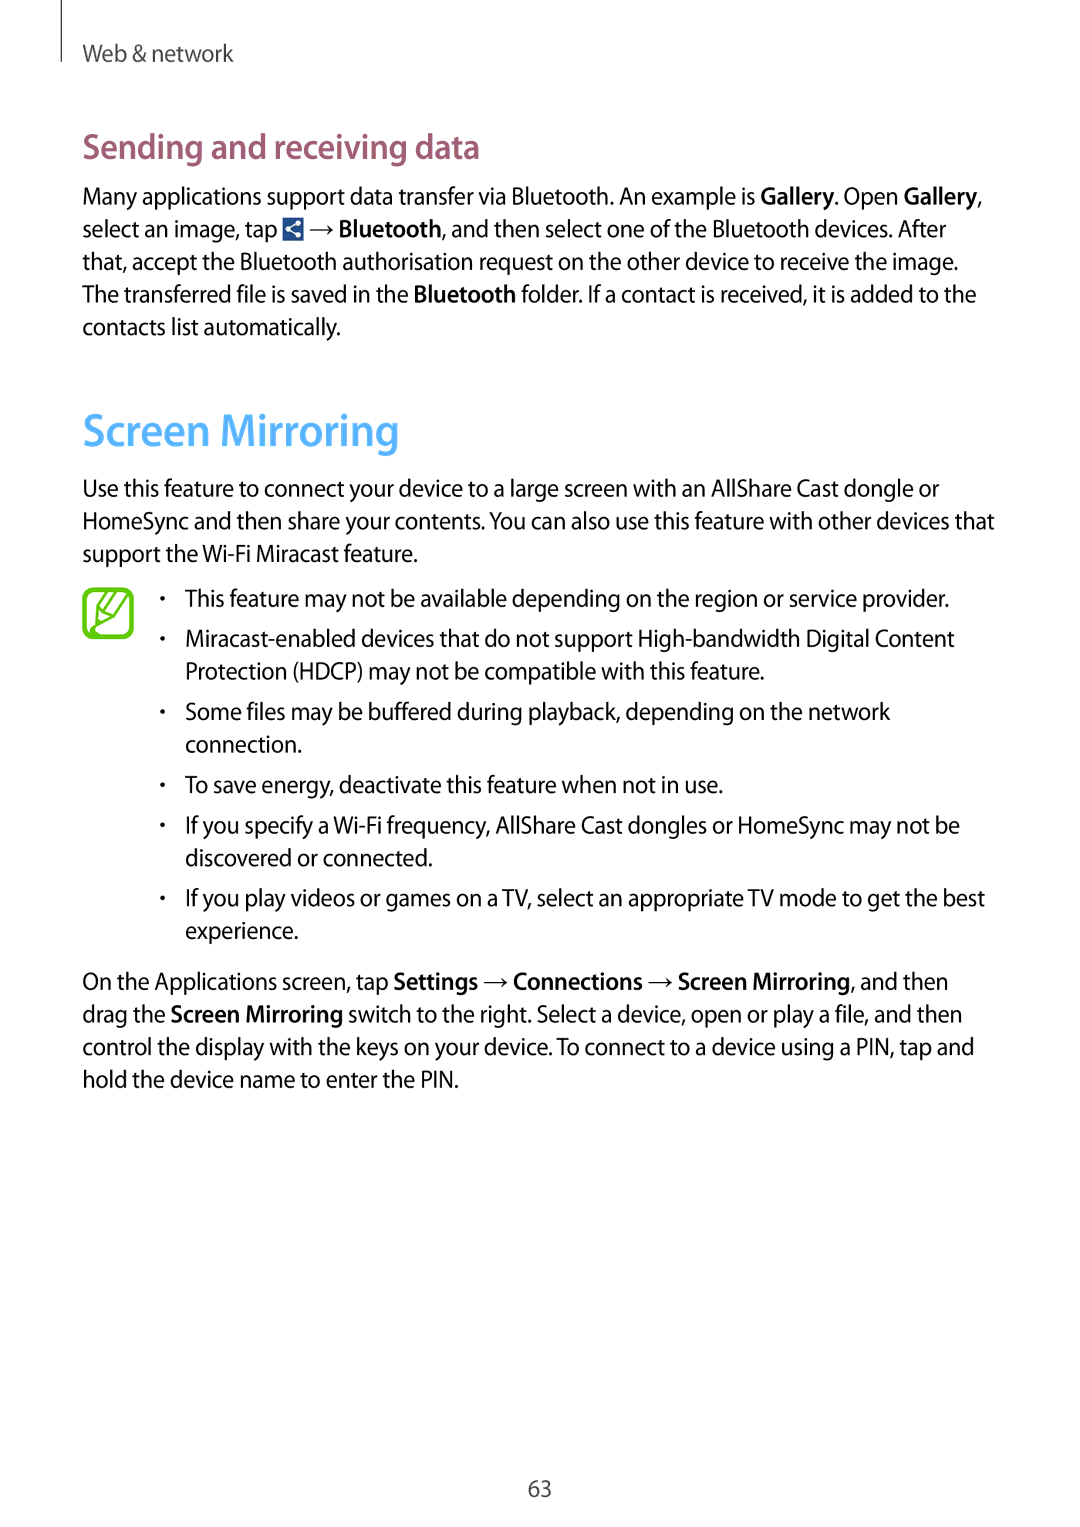 Samsung GT-I9195 user manual Screen Mirroring, Sending and receiving data 